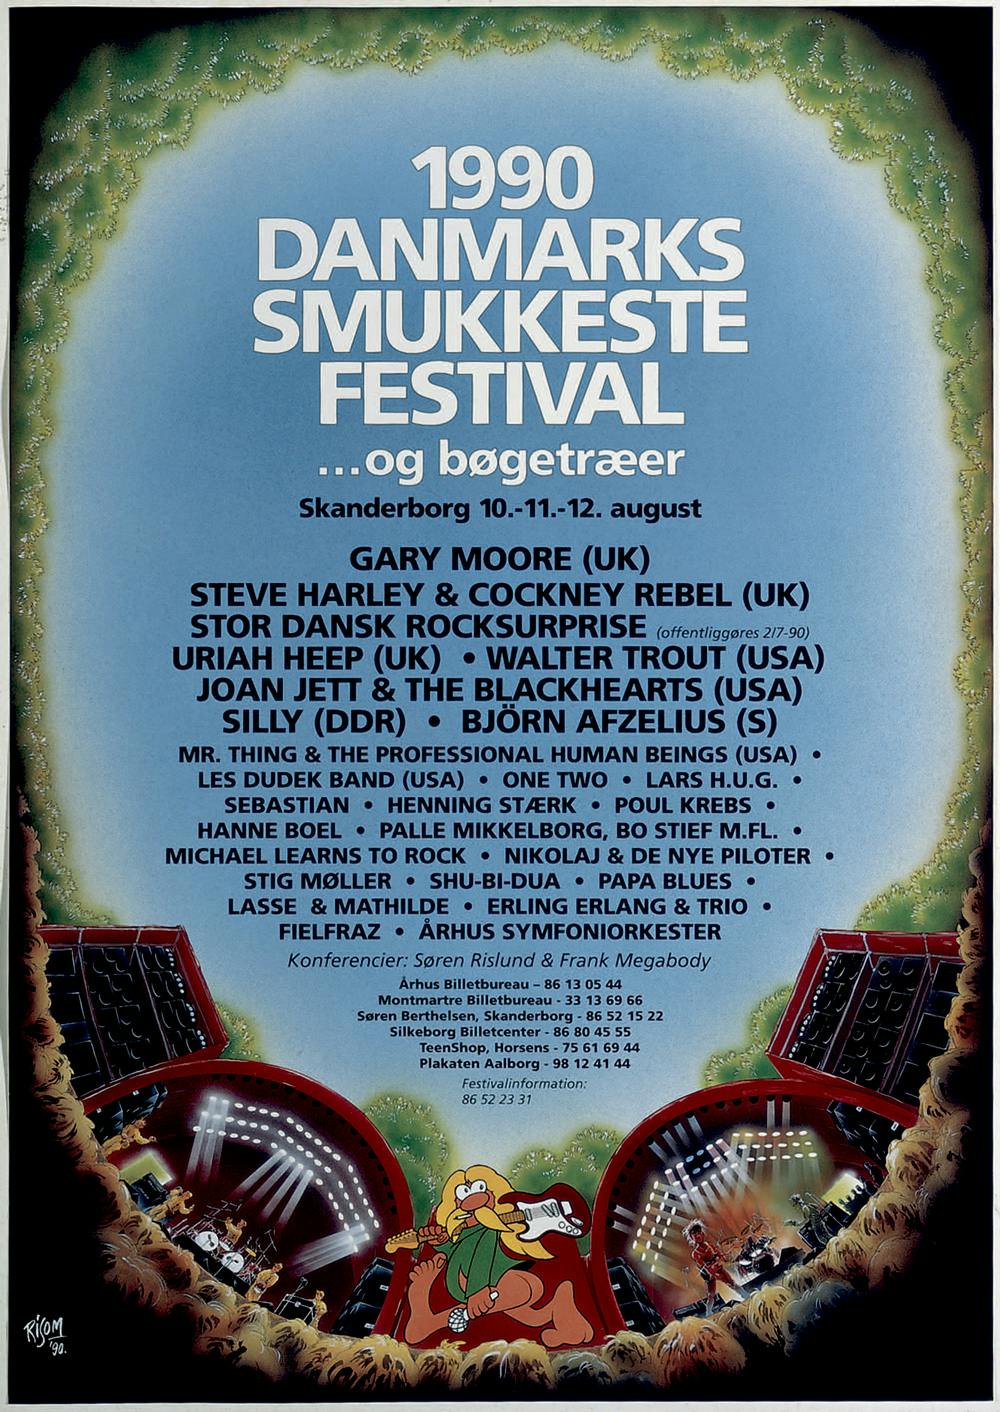 Smukfest 1990 poster